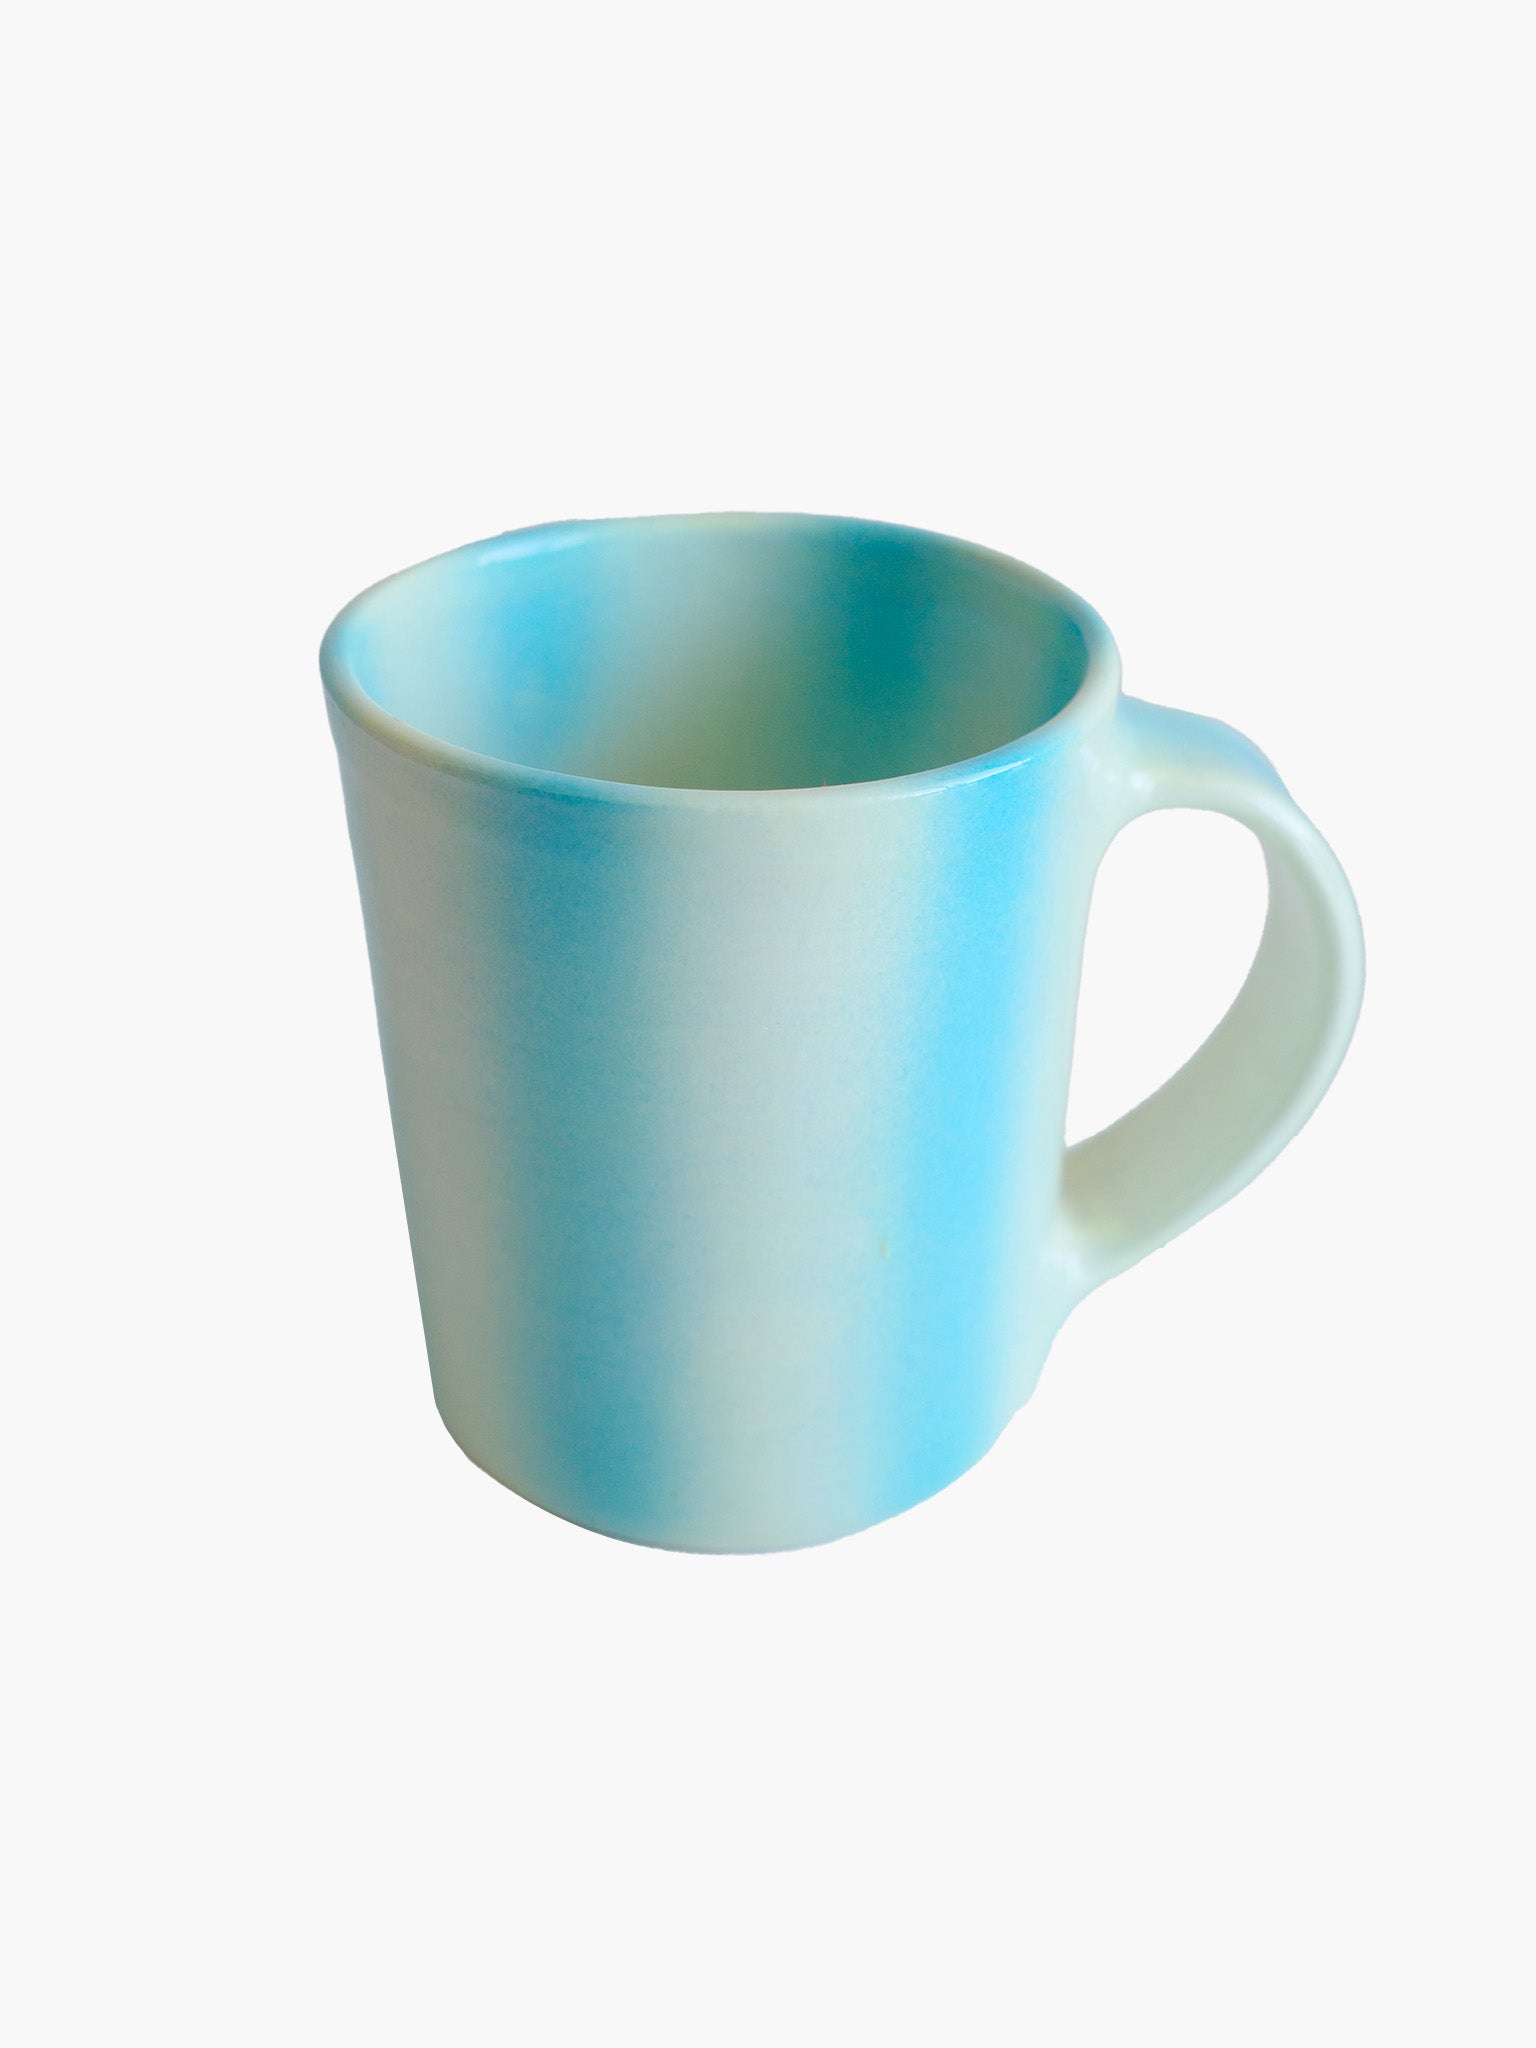 Stripey Mug x Stacey's Ceramics - Cream/Green